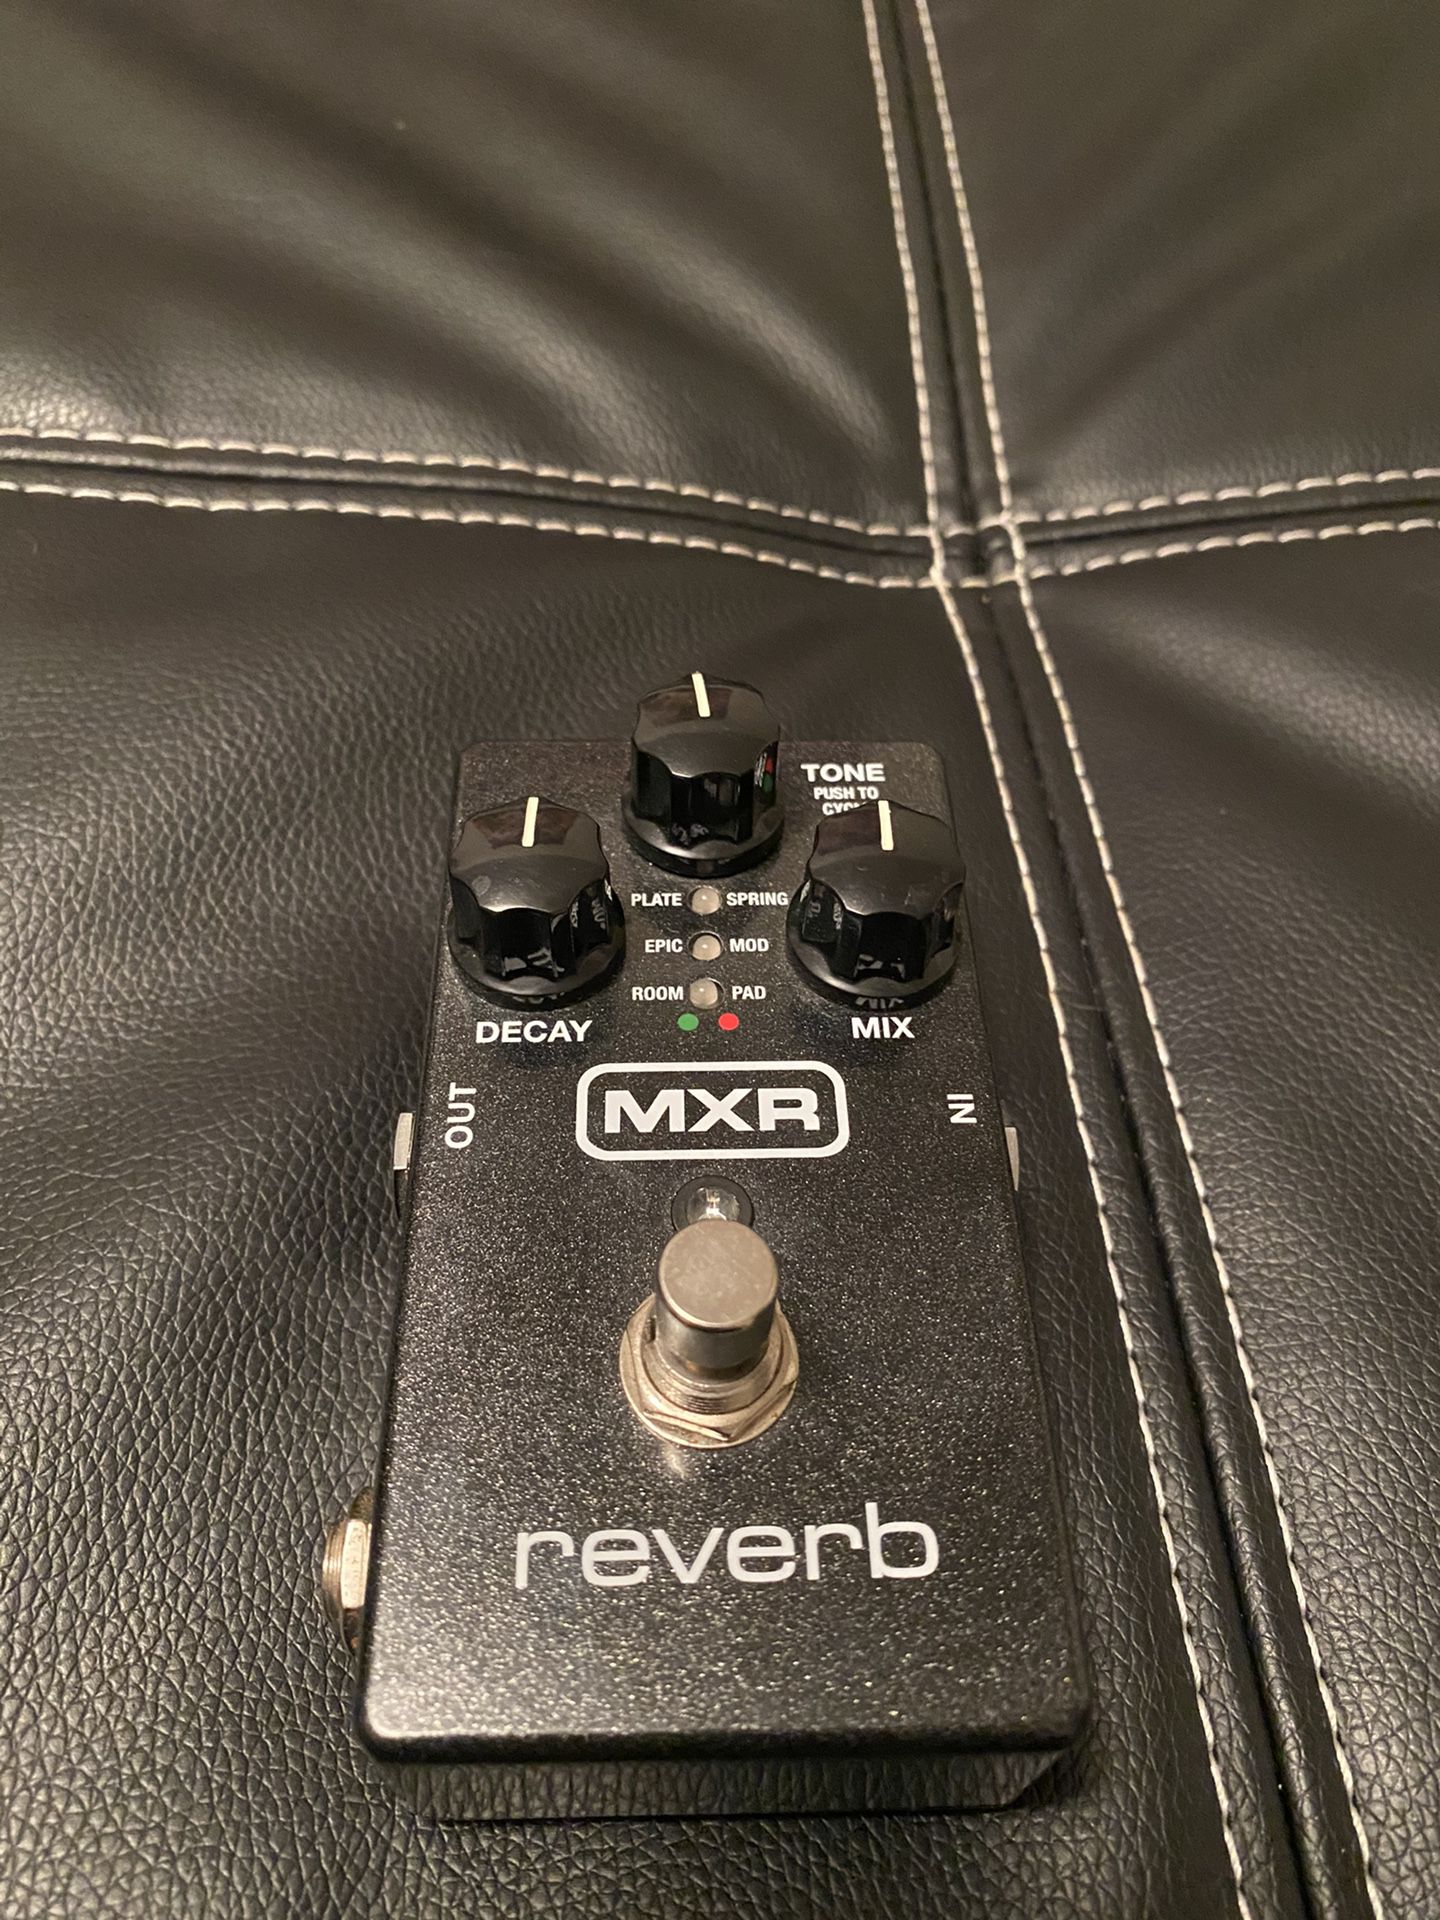 MXR M300 reverb